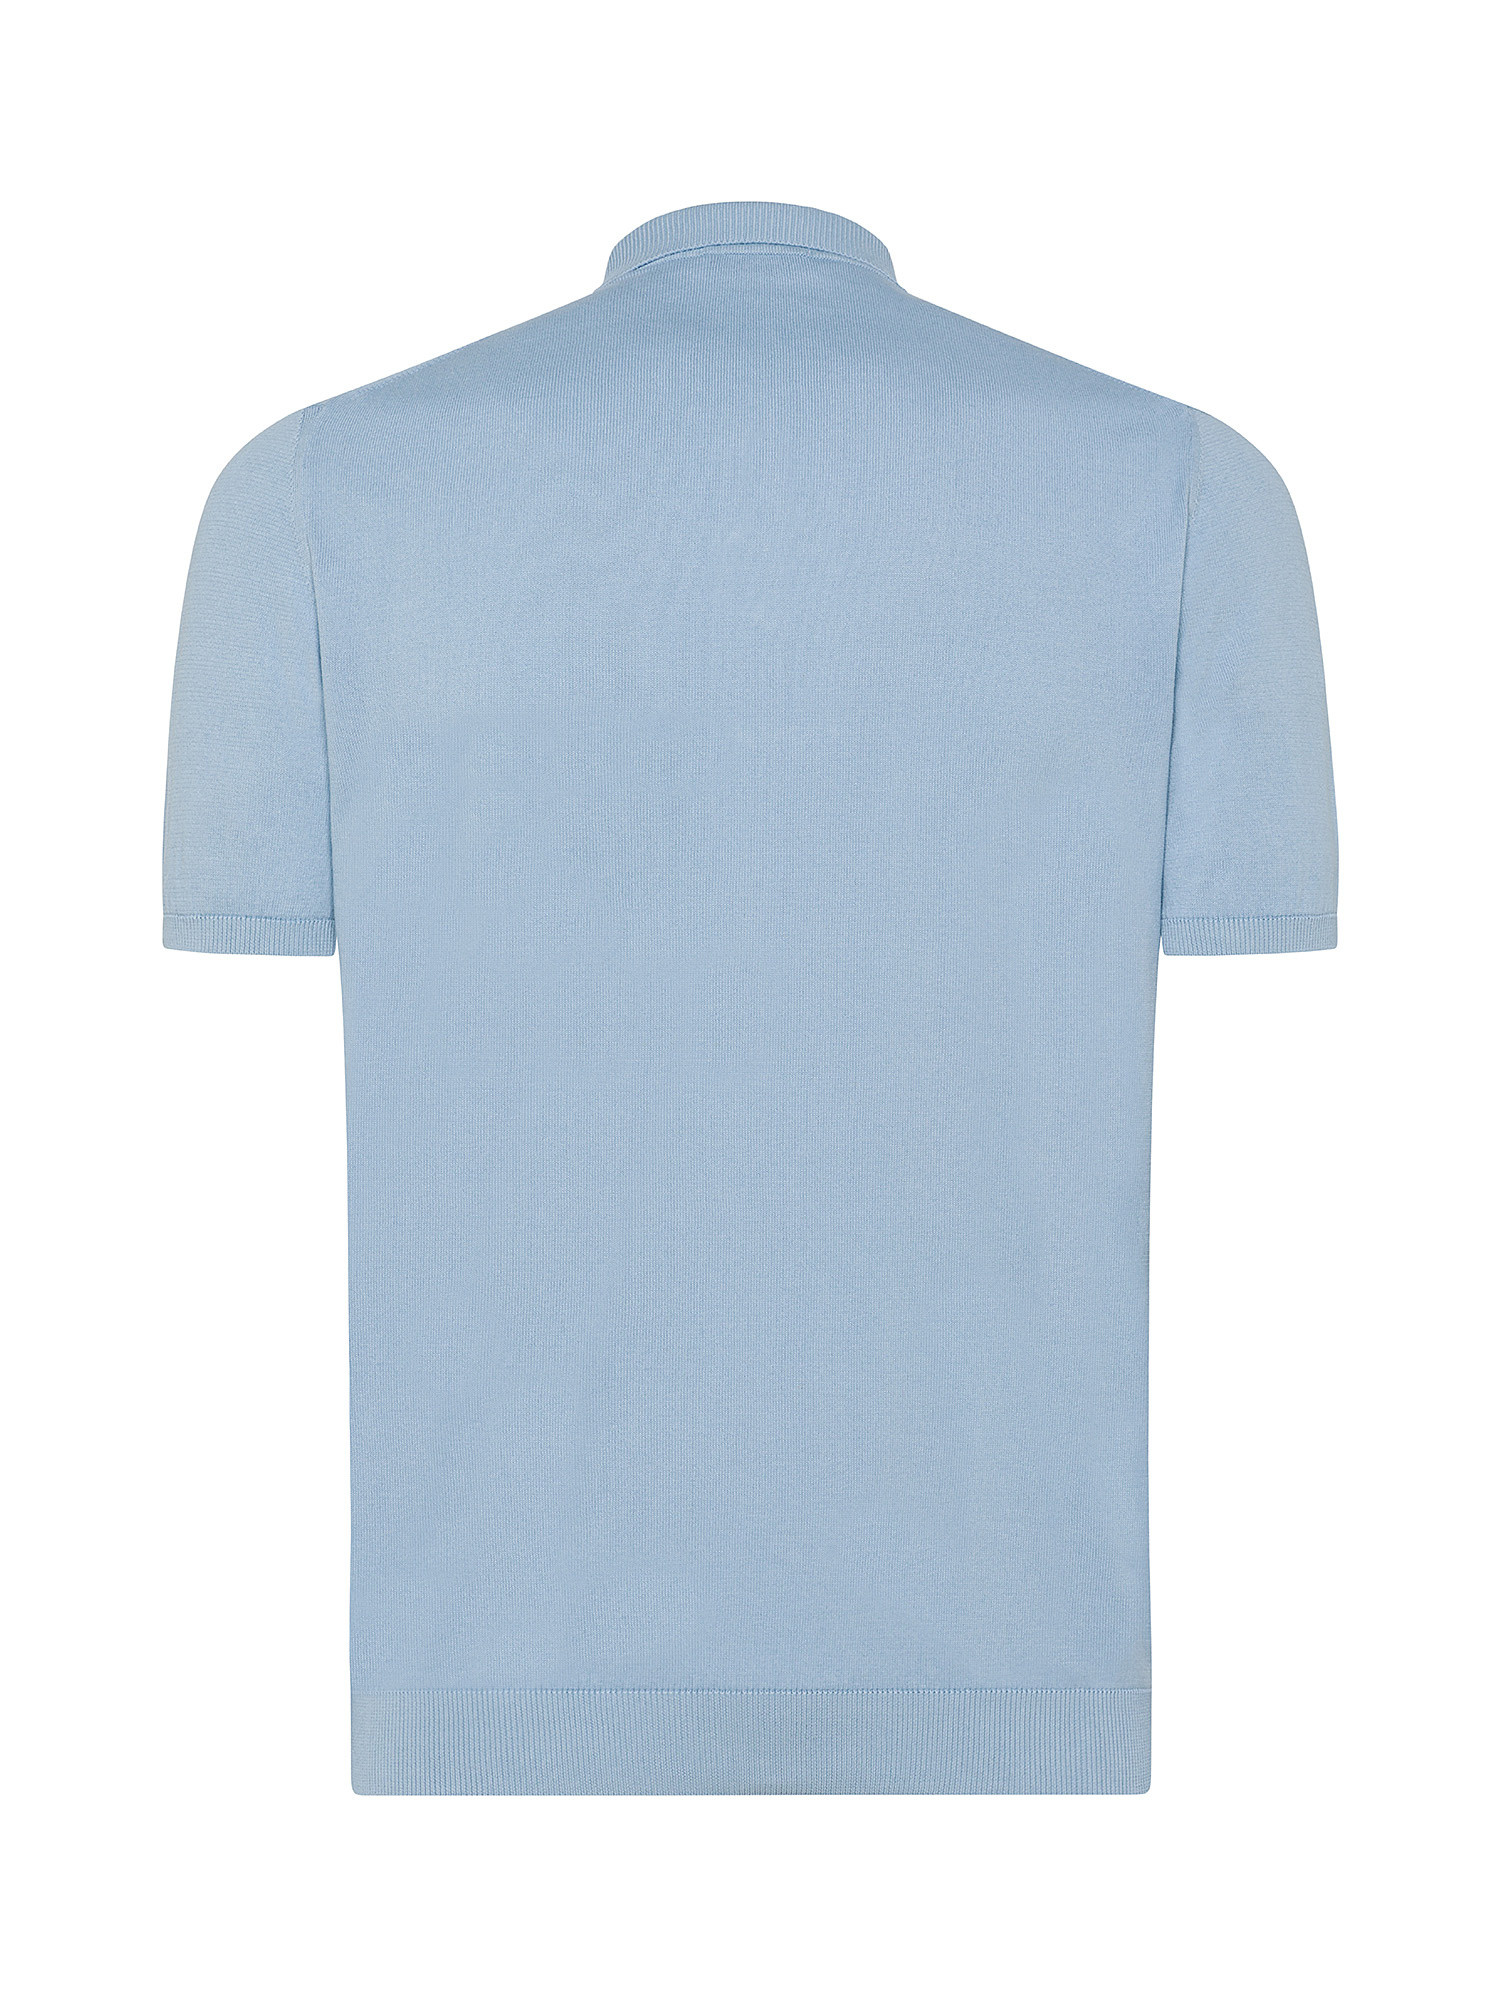 Luca D'Altieri - Cotton polo shirt, Blue Celeste, large image number 1